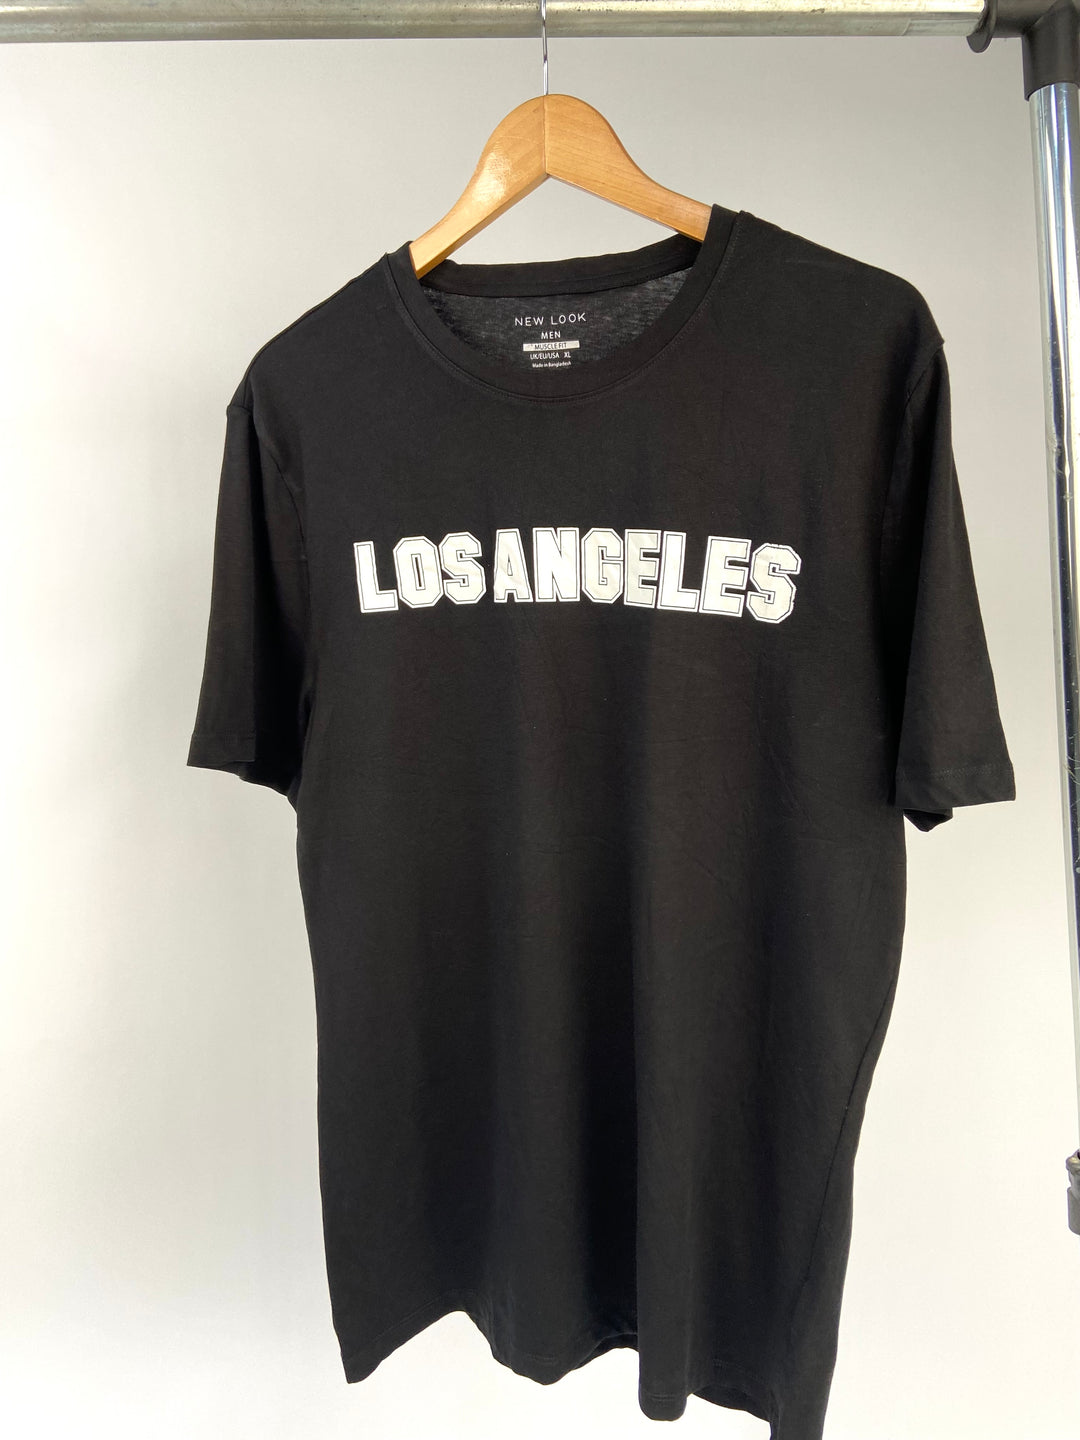 Los Angeles text print t-shirt